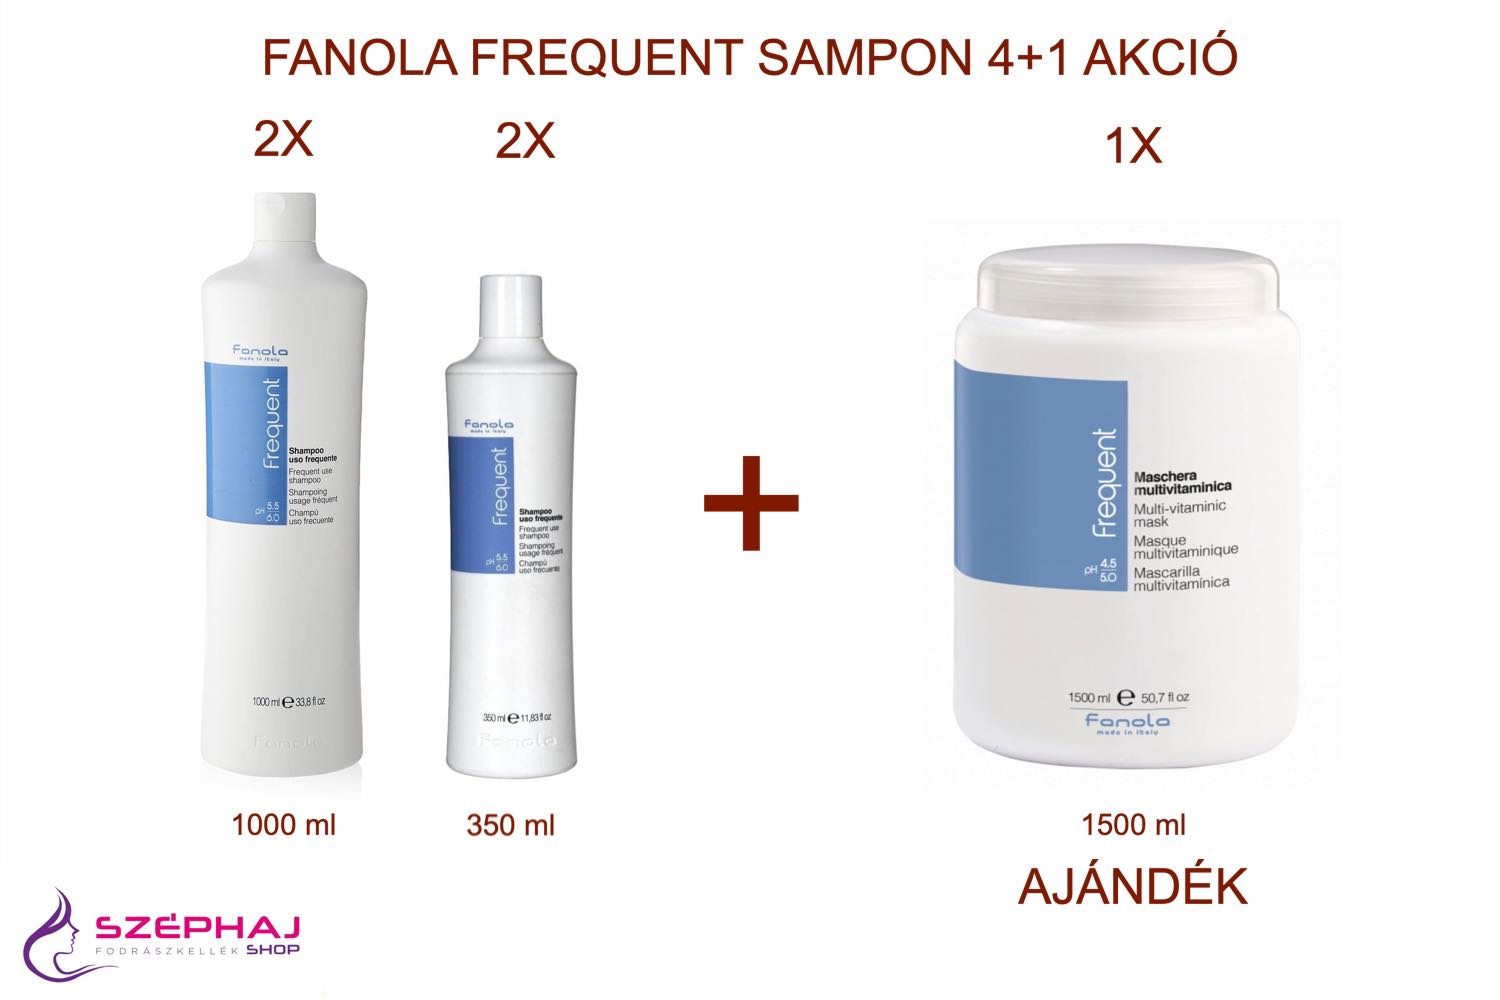 FANOLA Frequent Shampoo 1000 ml & 350 ml 4+1 AKCIÓ